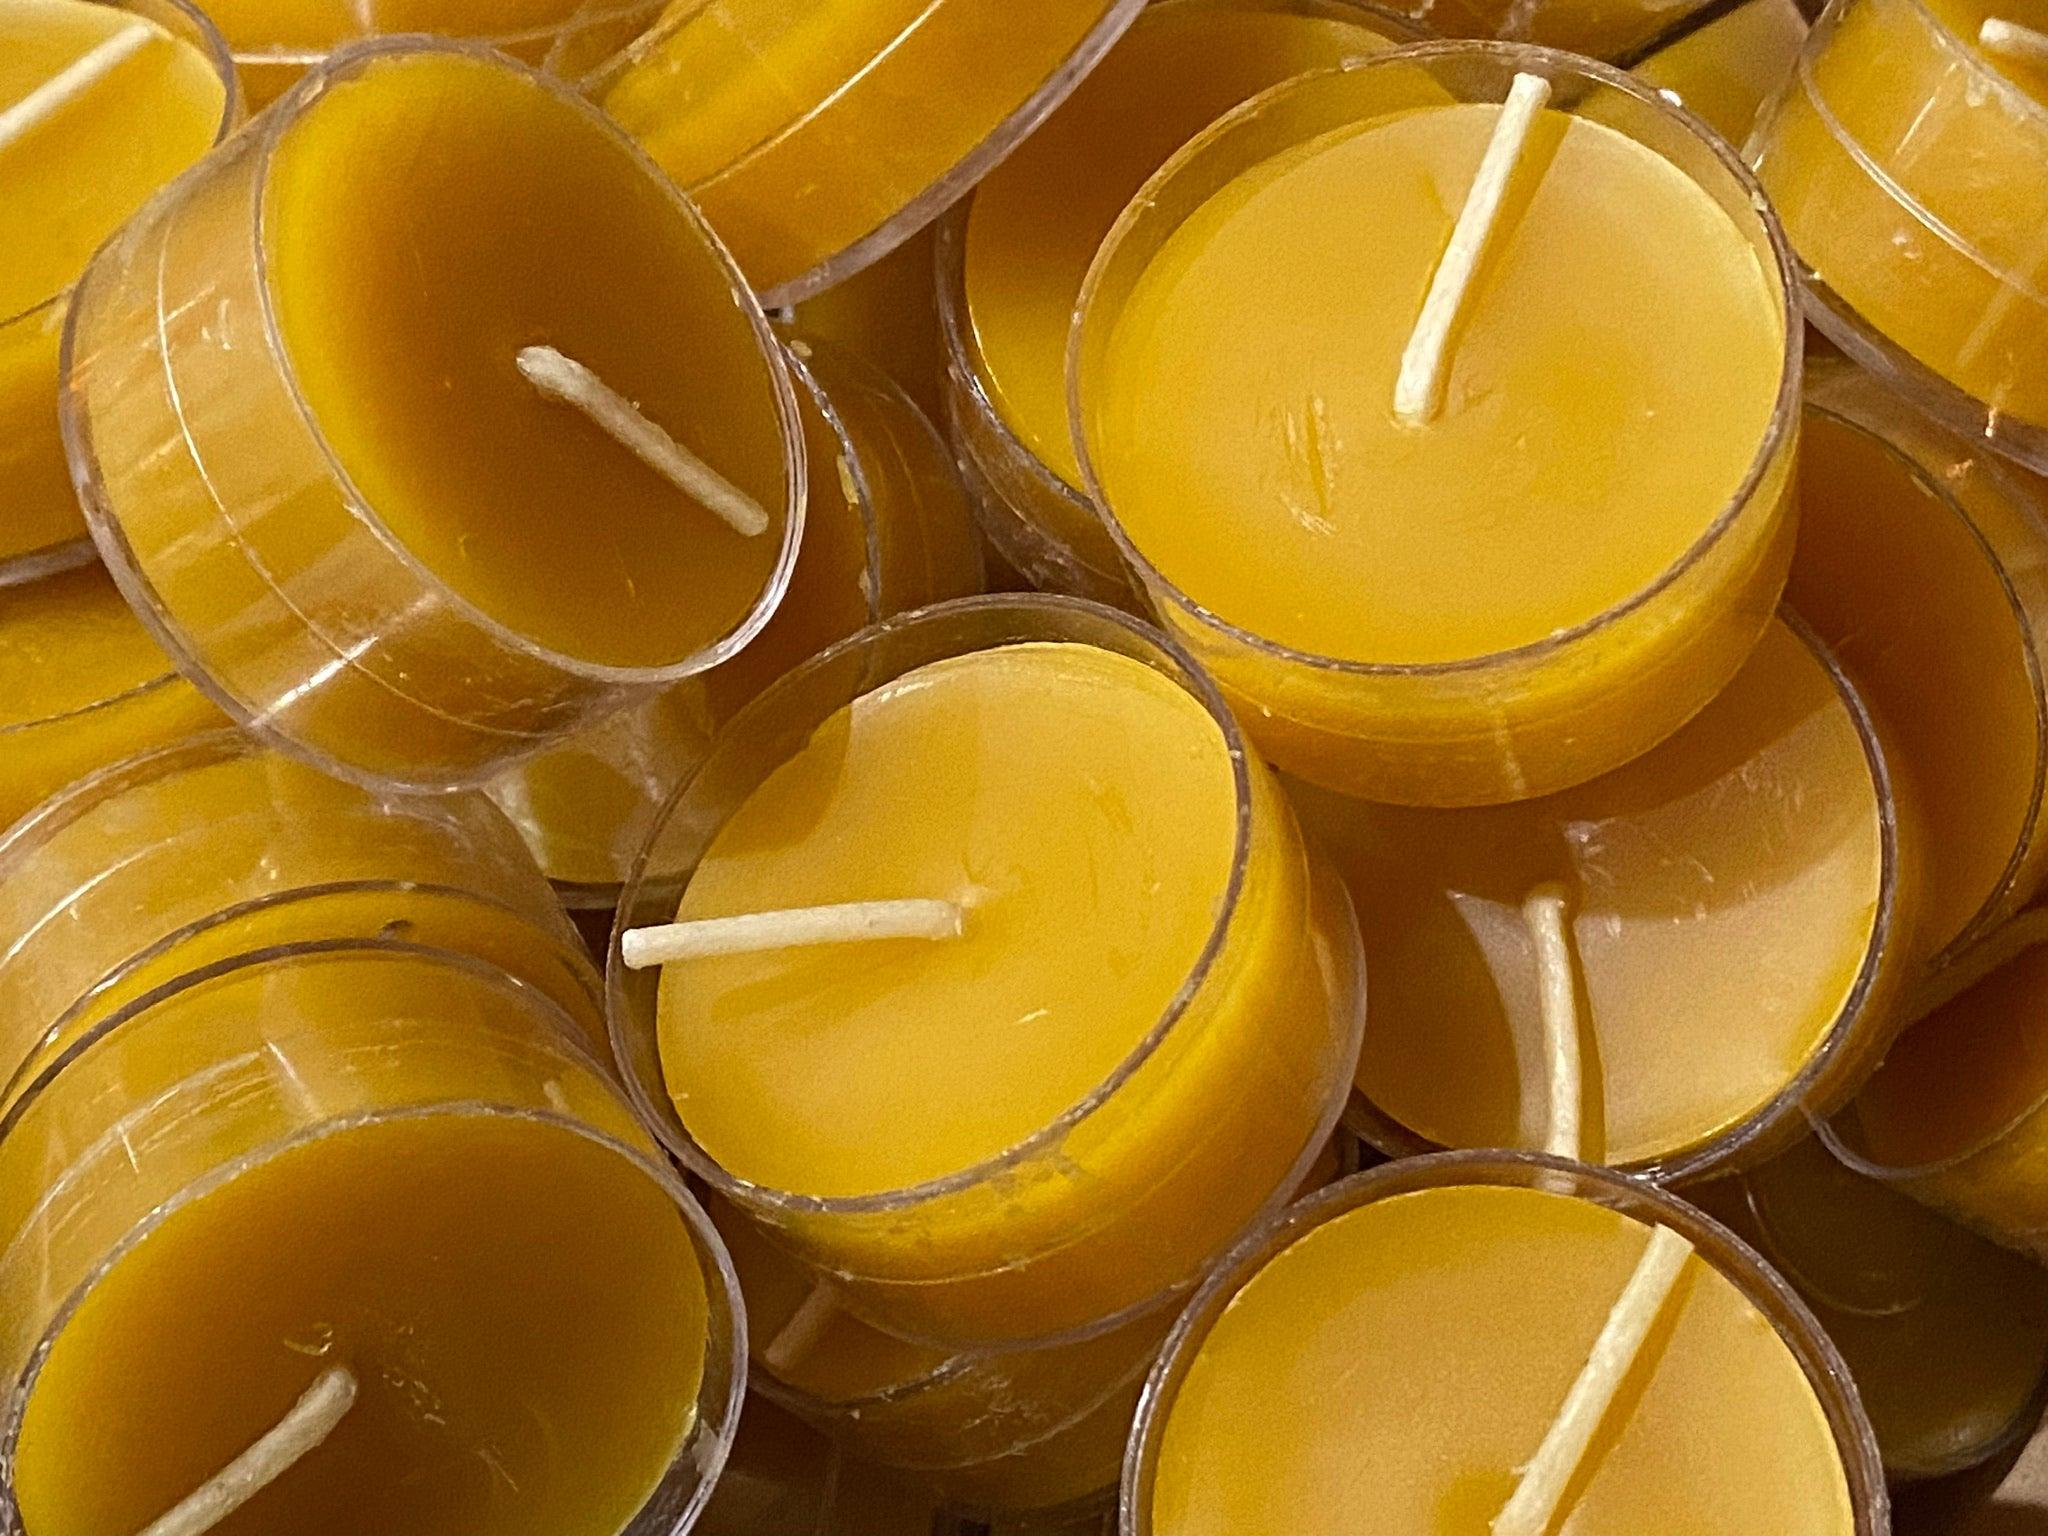 Natural Beeswax Candles